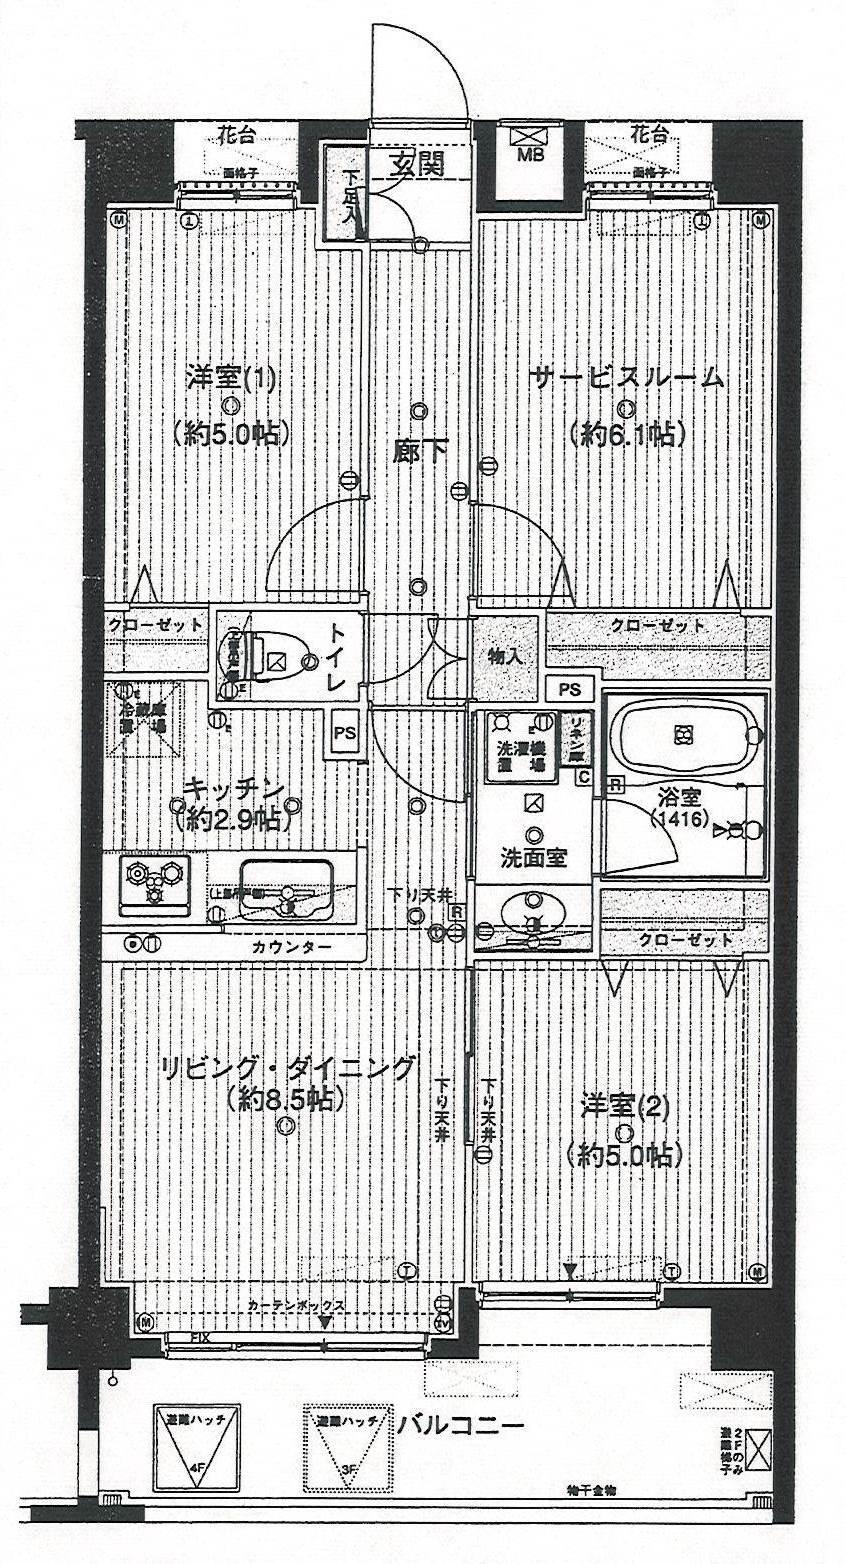 Floor plan. 2LDK + S (storeroom), Price 18.9 million yen, Footprint 59.6 sq m , Balcony area 9.22 sq m